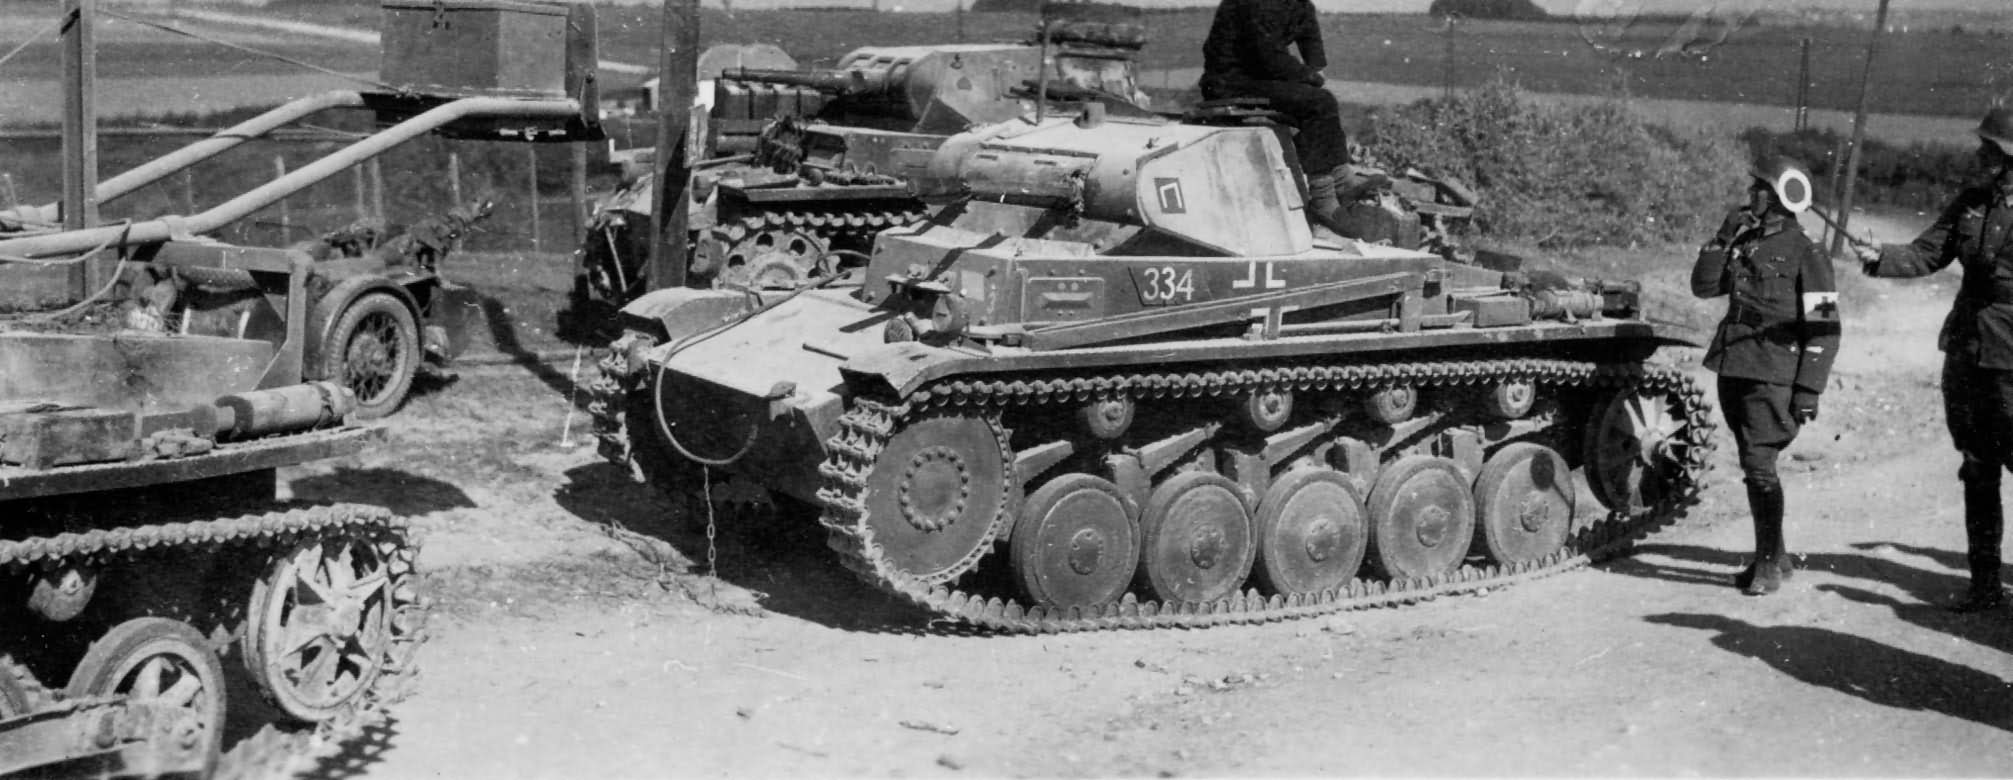 Panzer_II_ausf_C_late_number_334.jpg